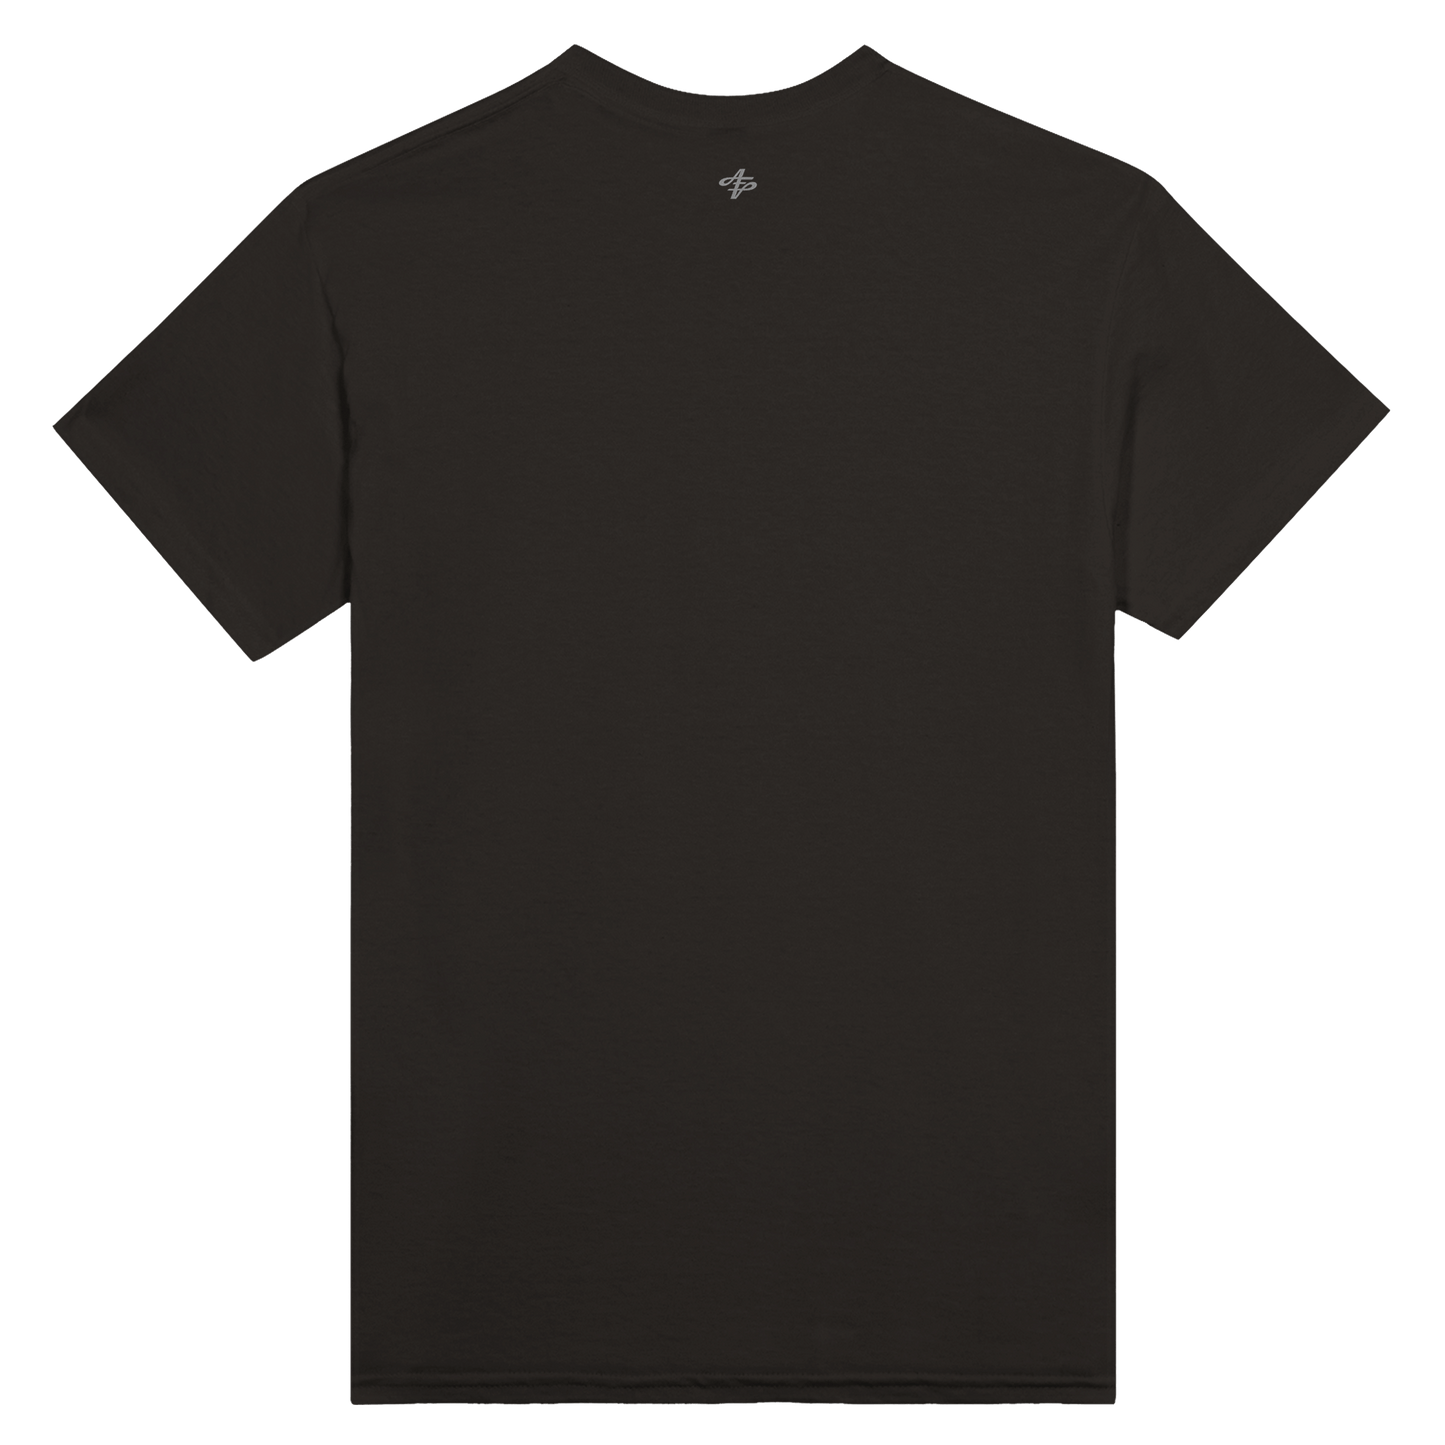 The Love - Heavyweight Unisex Crewneck T-shirt apparel